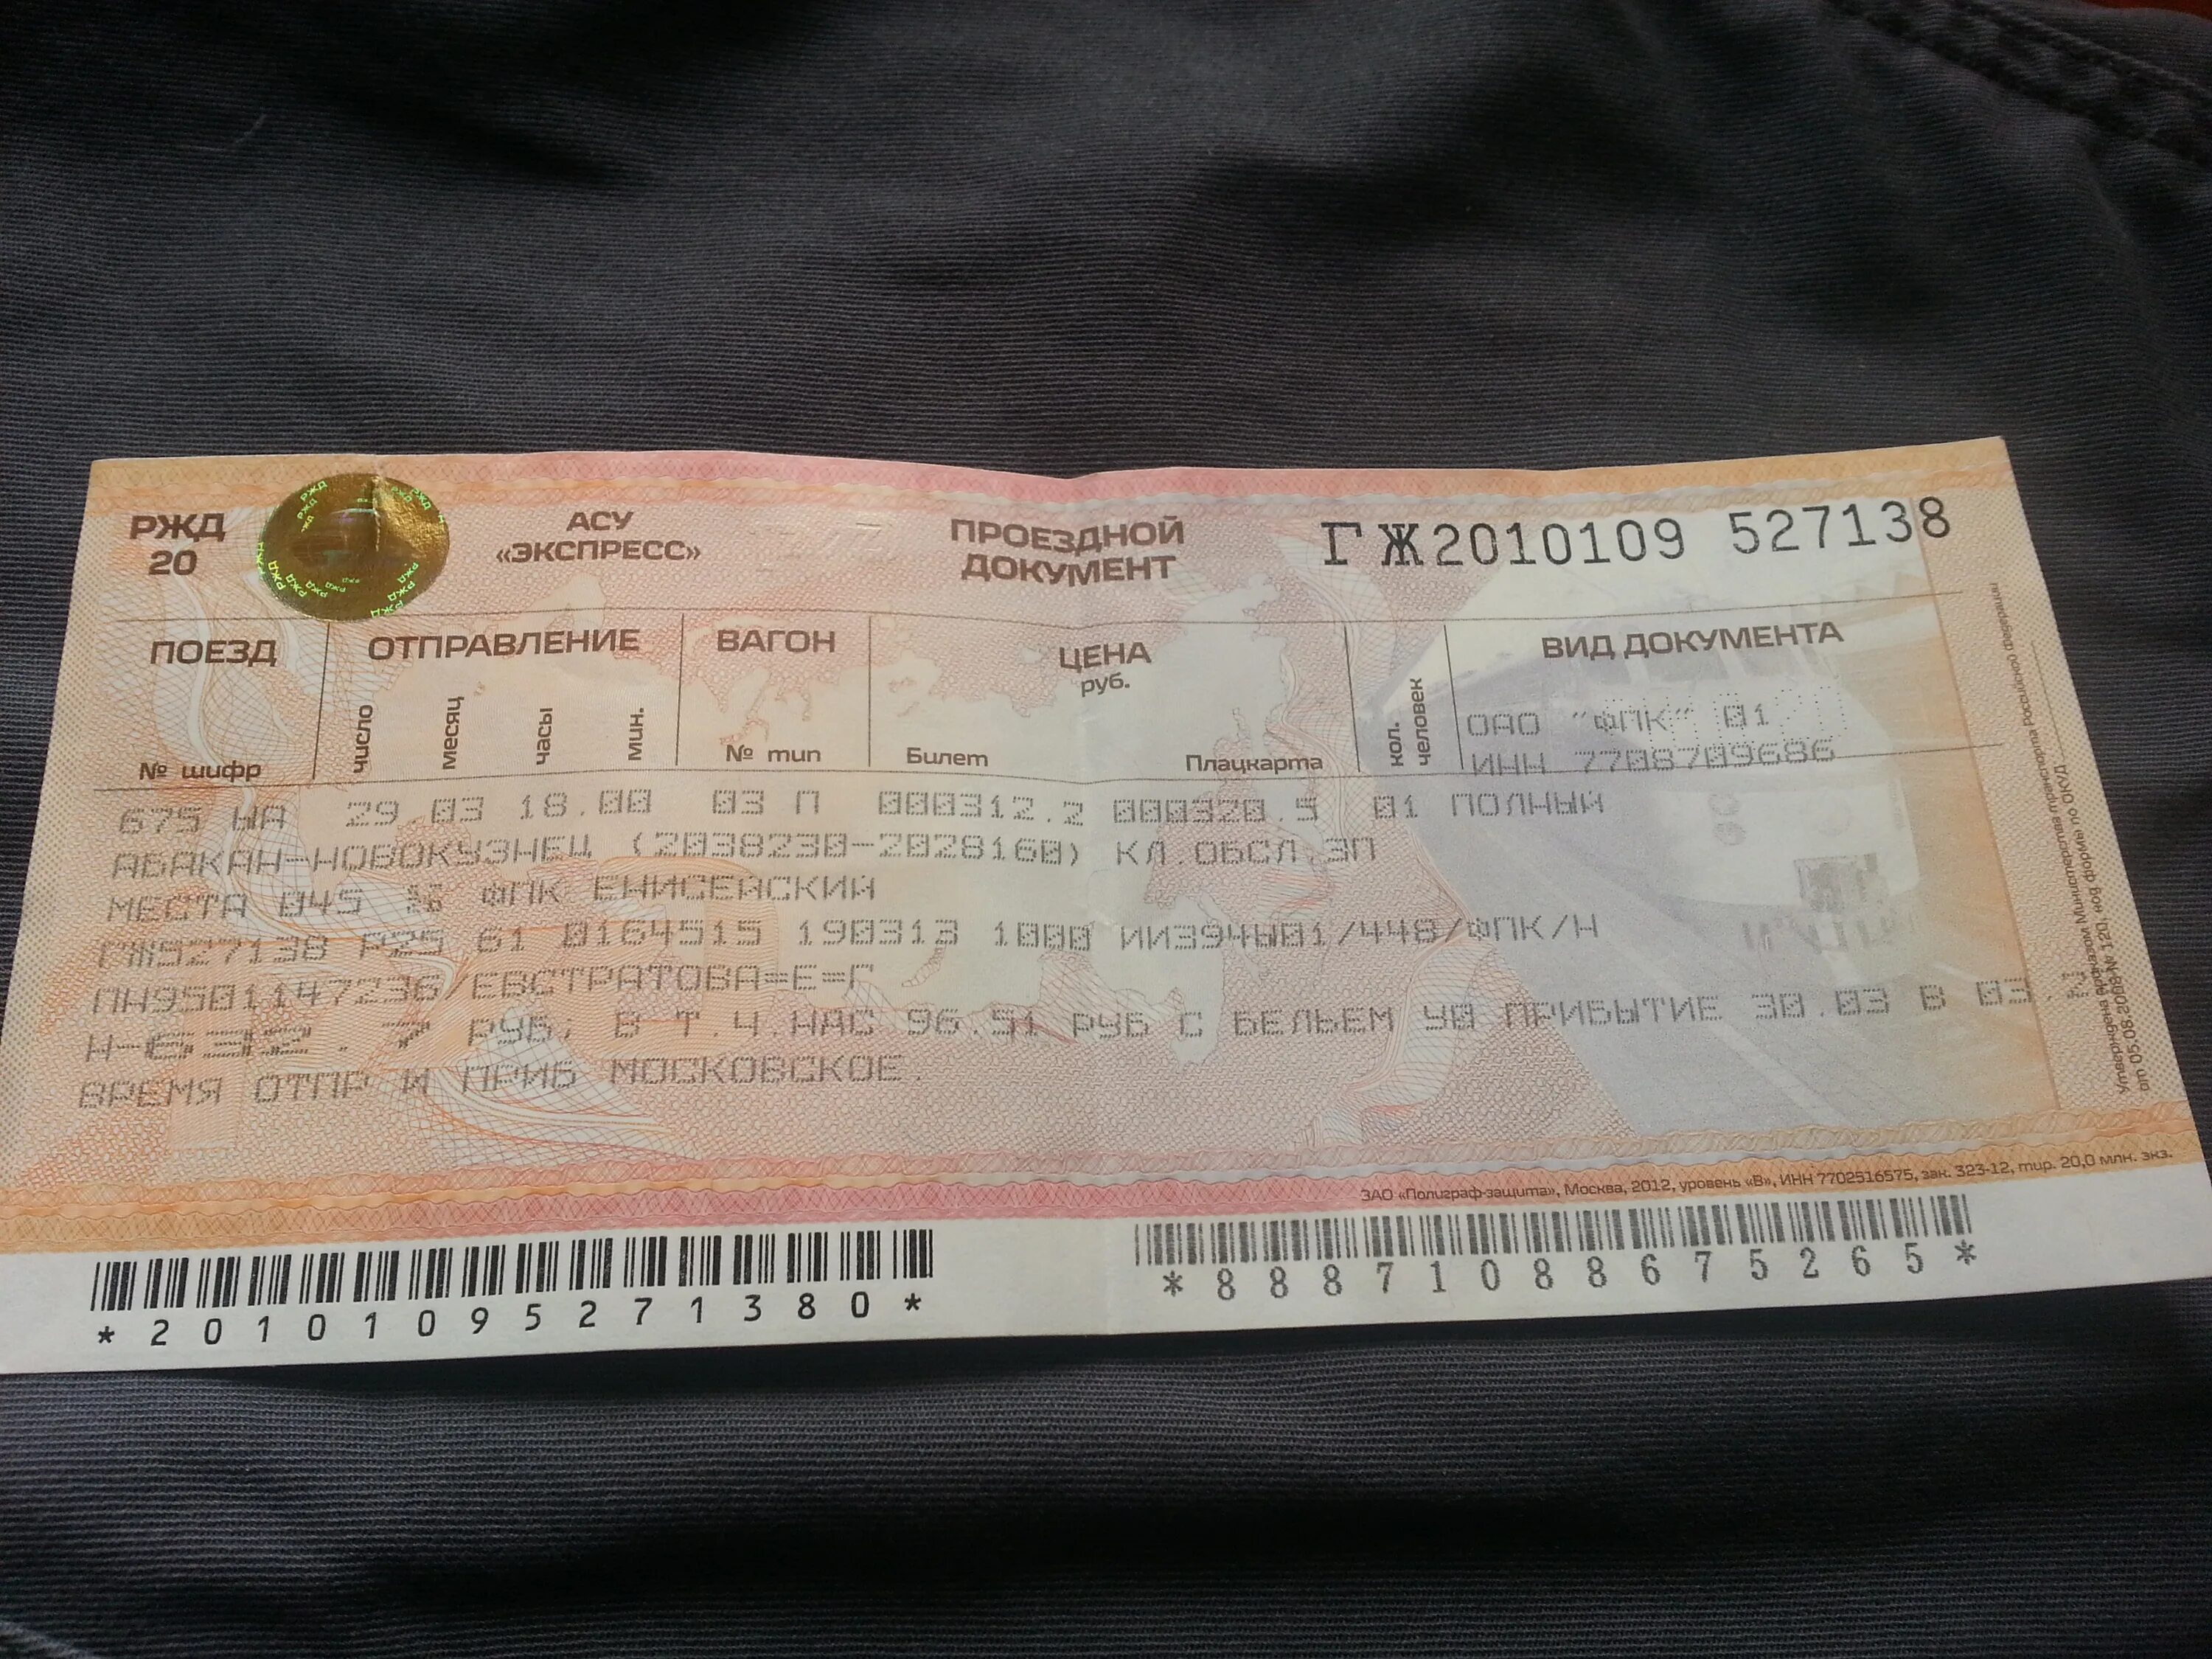 Екатеринбург киров жд билеты. ЖД билеты. Билет на поезд. Билеты ЖД на поезд. Фотография билета на поезд.